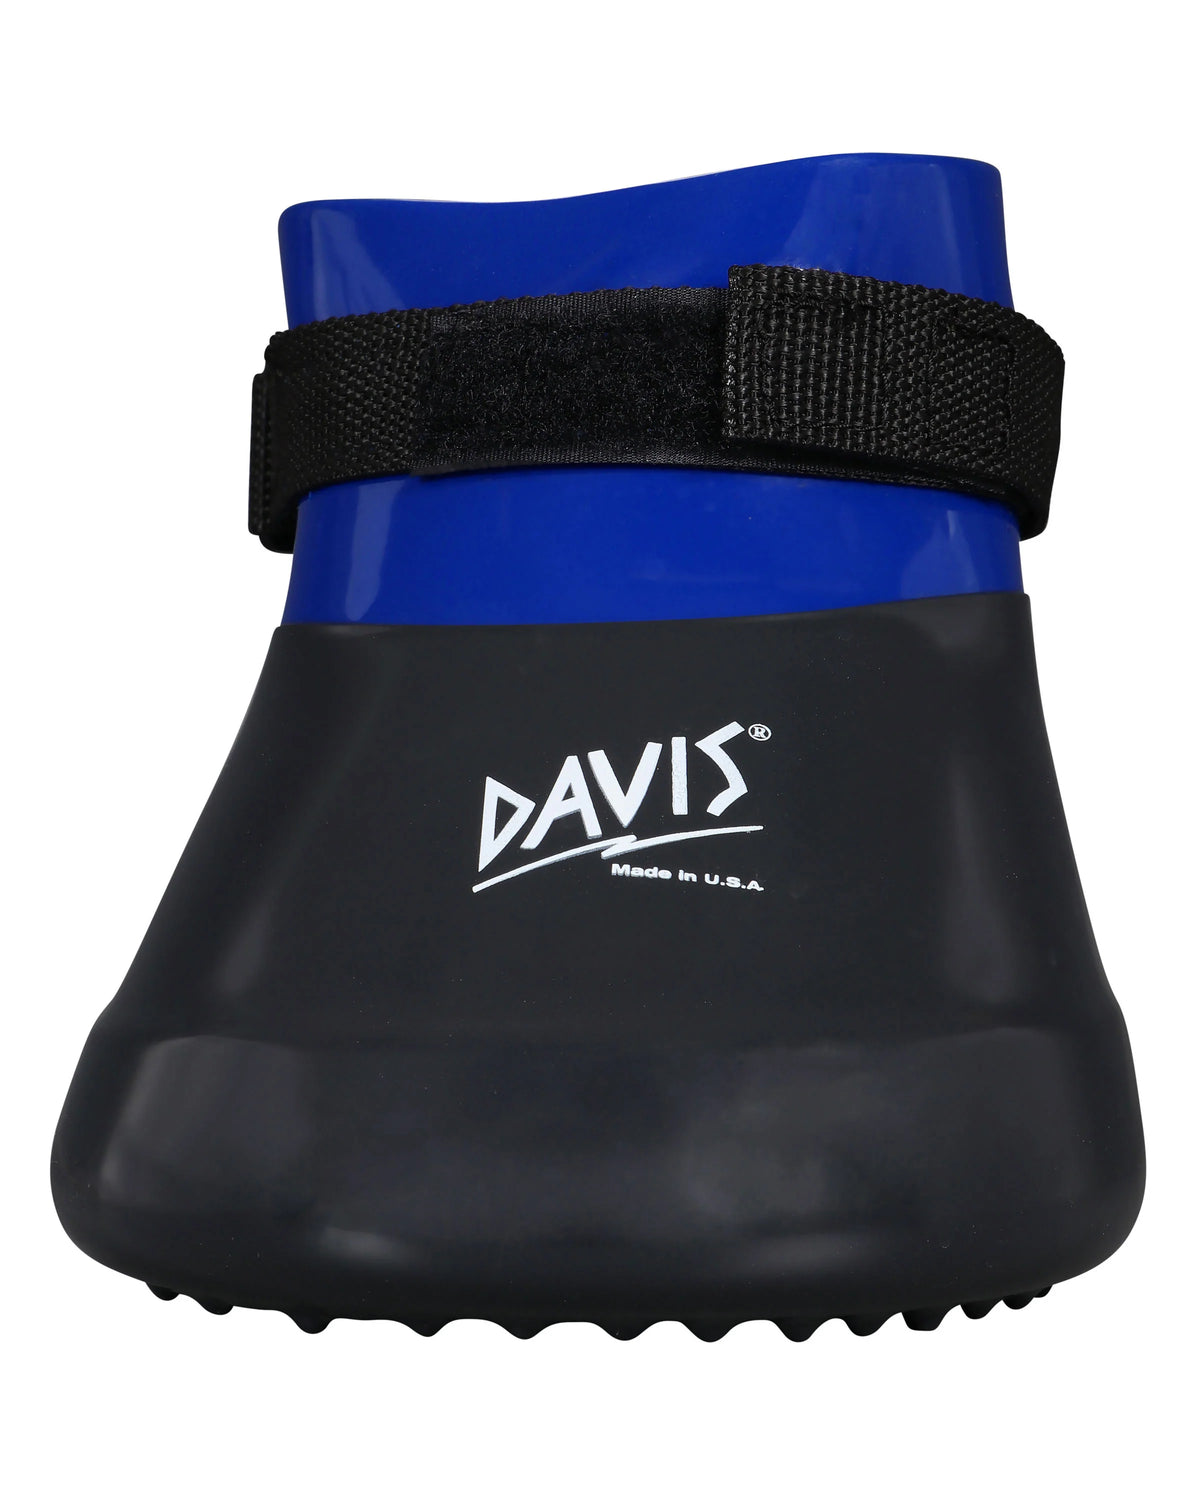 Davis Hoof Treatment Boot